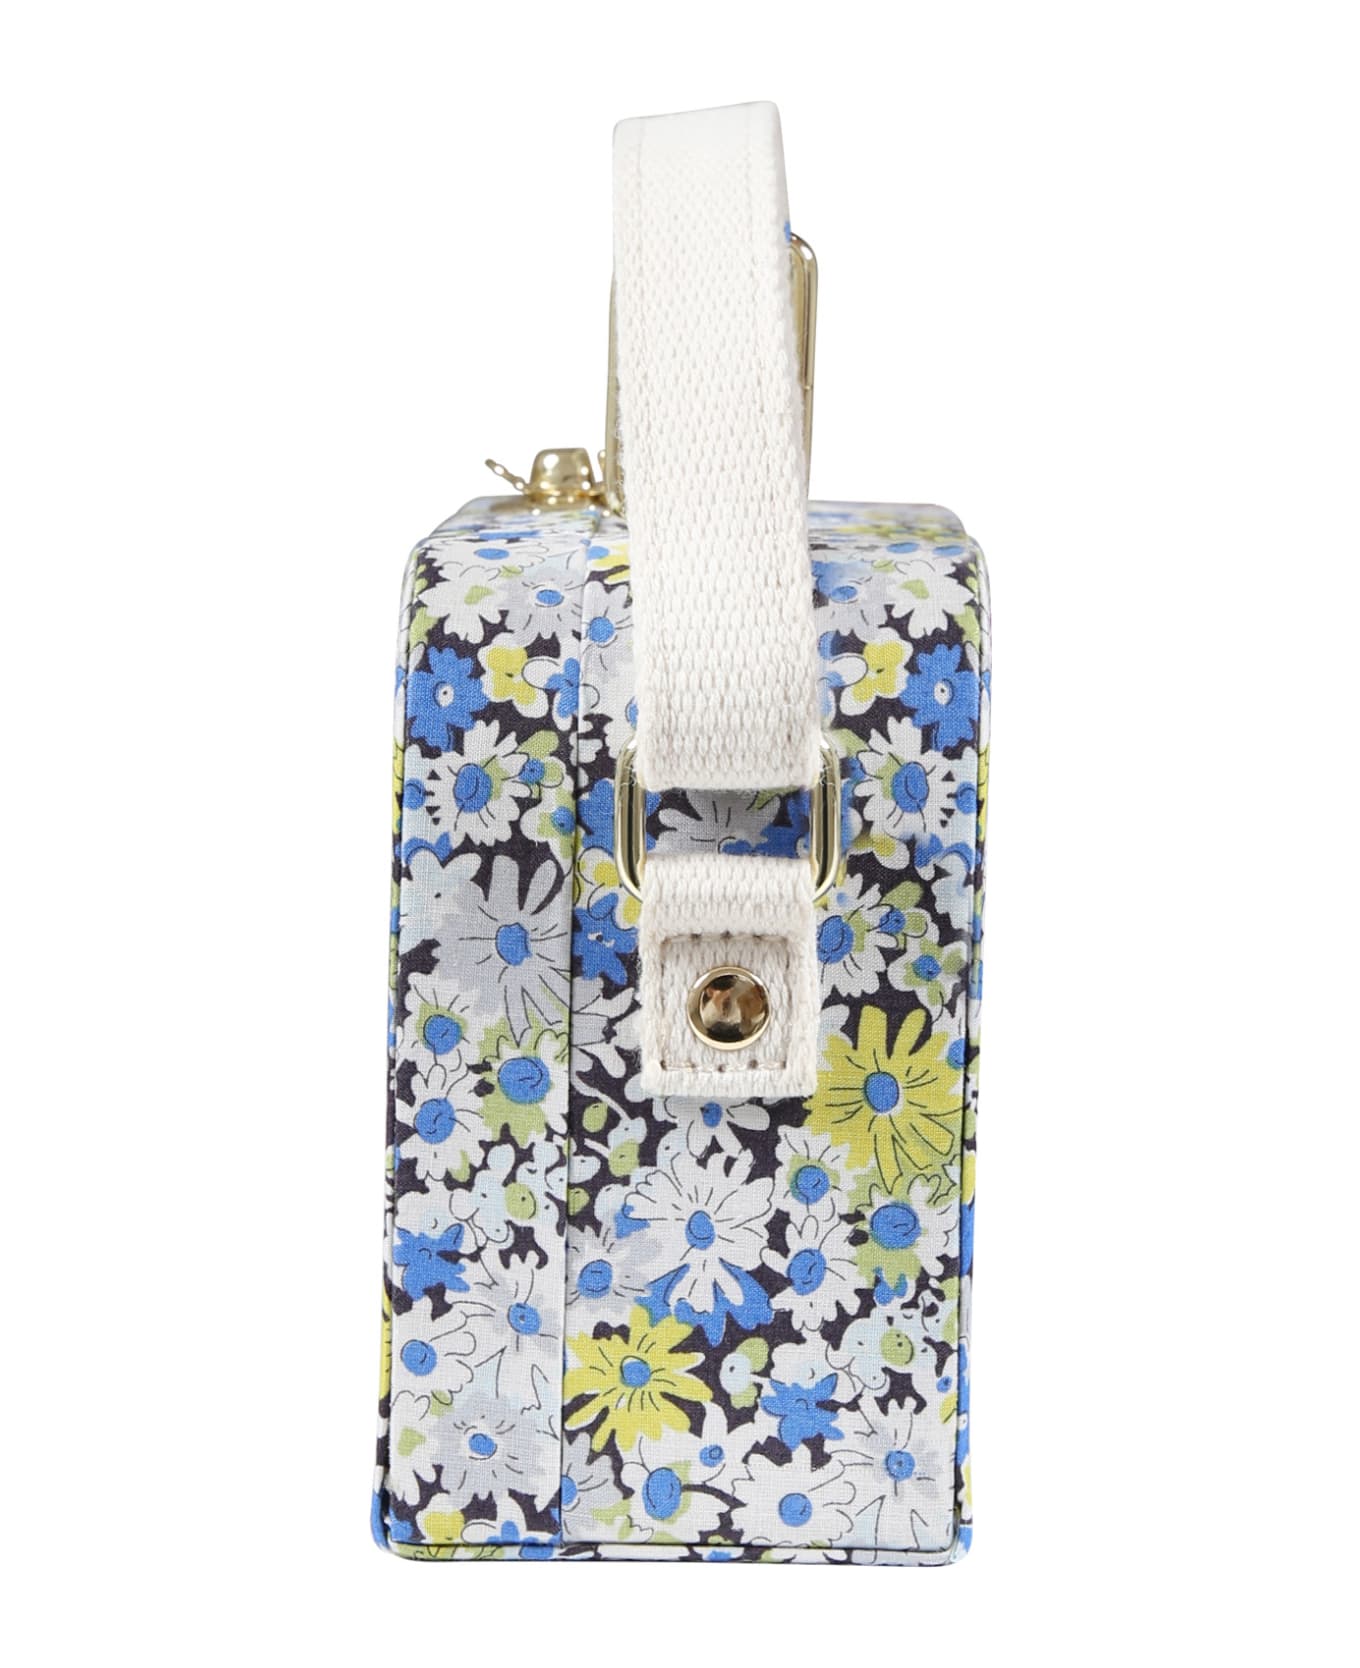 Bonpoint Light Blue Bag For Girl With Floral Pattern - Light Blue